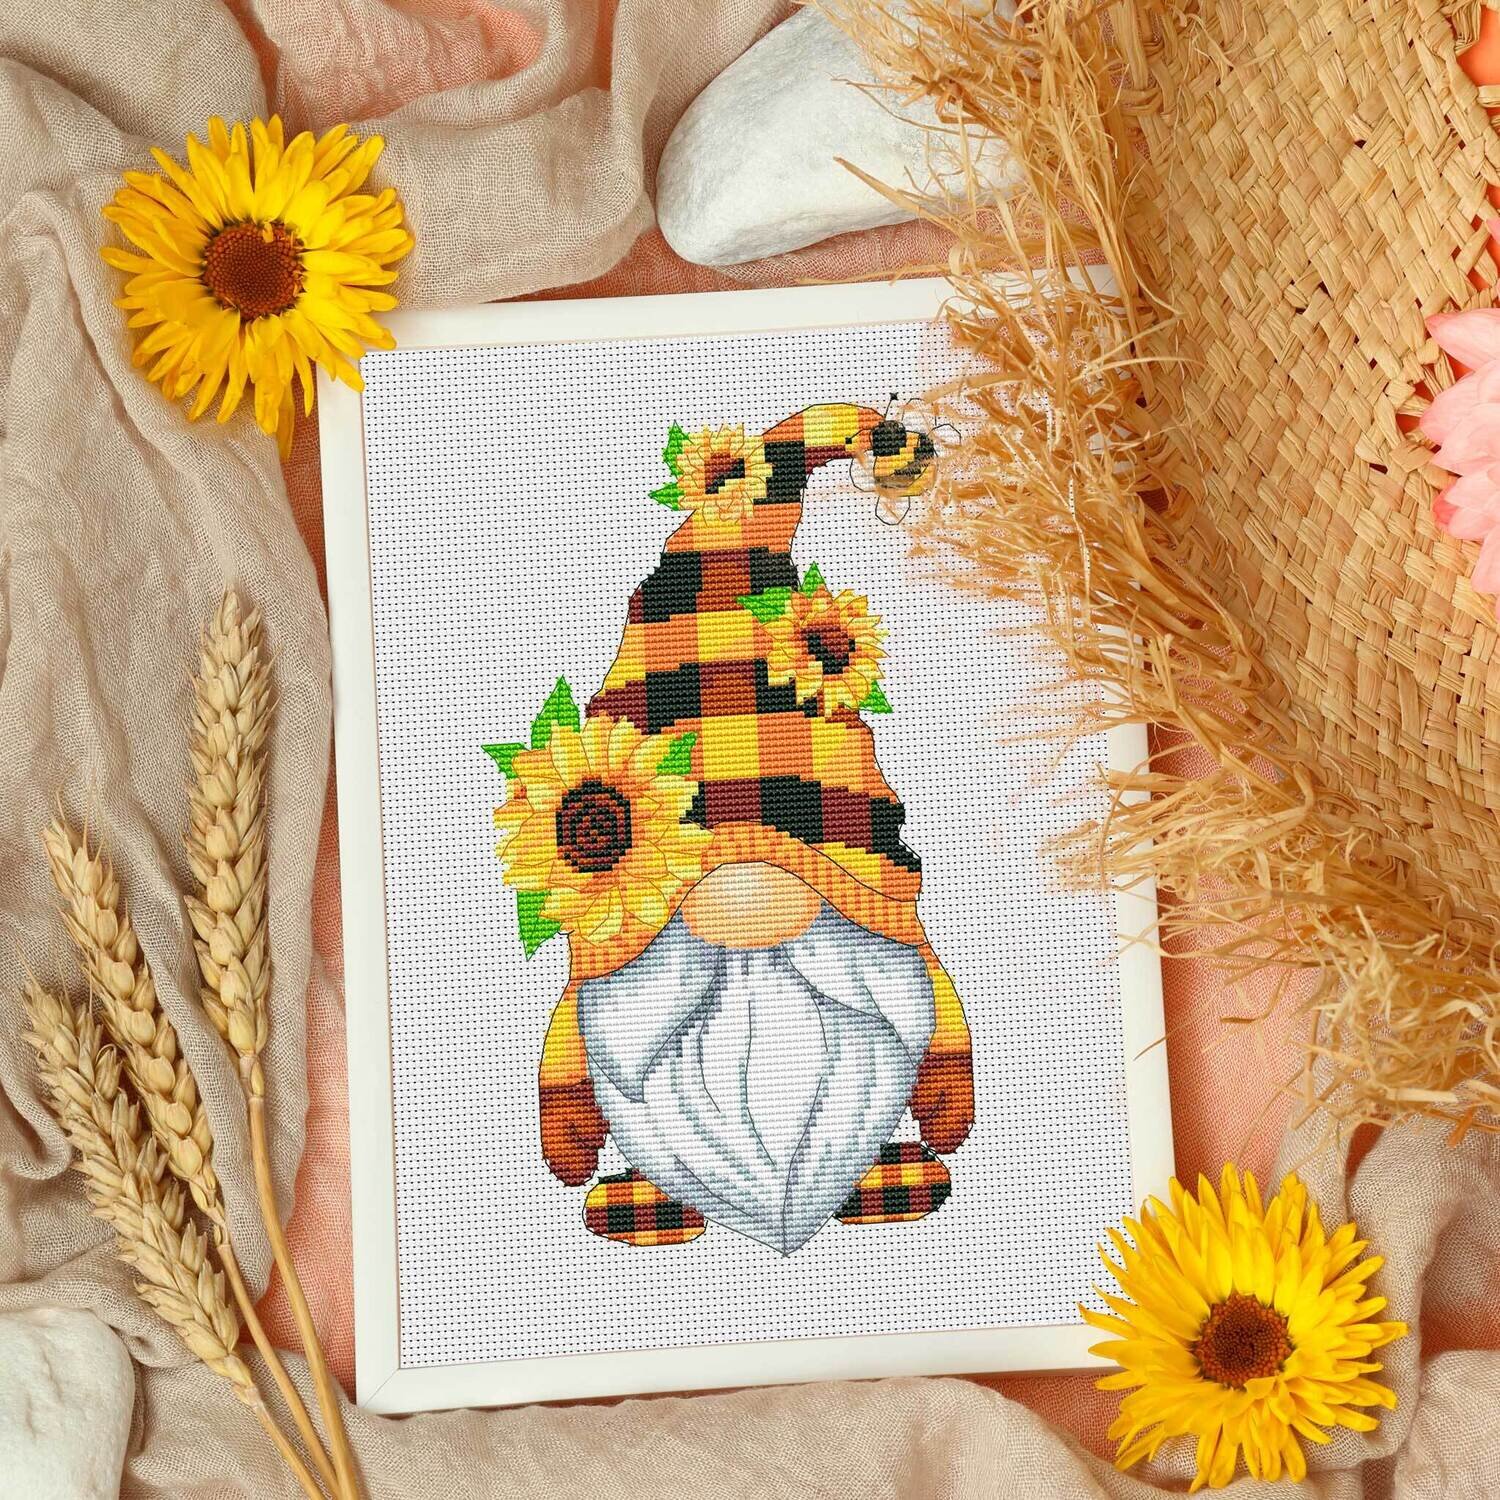 Gnome with sunflowers, Cross stitch pattern, Summer cross stitch, Counted cross stitch